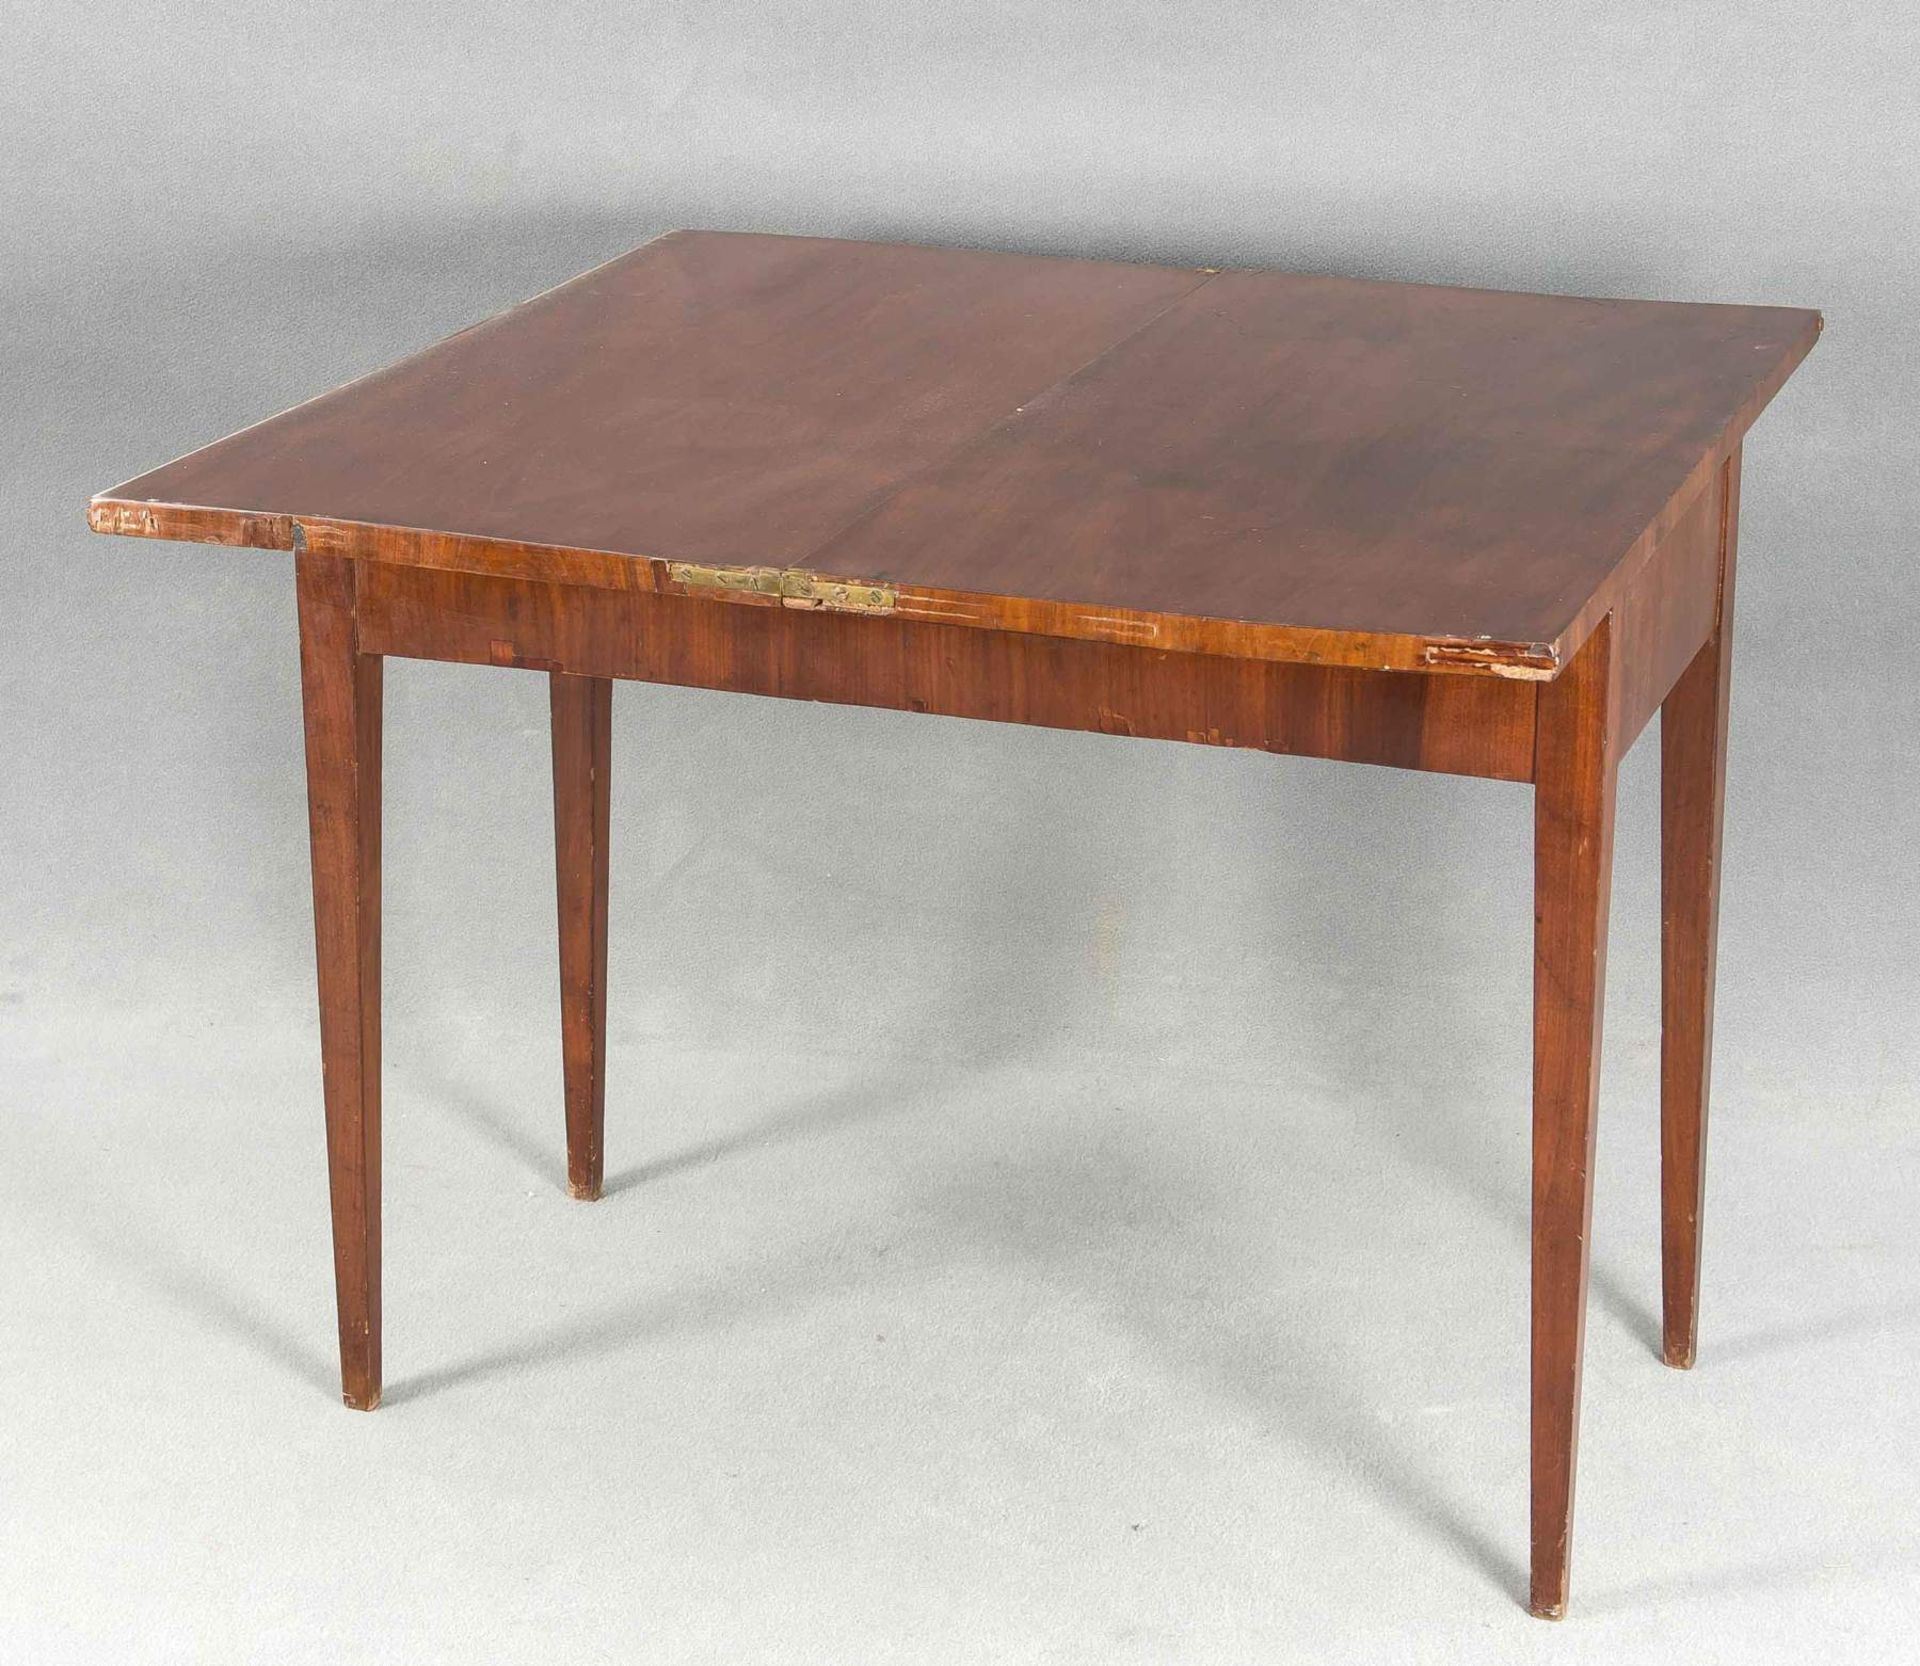 Biedermeier-Konsol-/Spieltisch, um 1820, Mahagoni massiv/furniert, 72 x 89 x 44 cmMindestpreis: